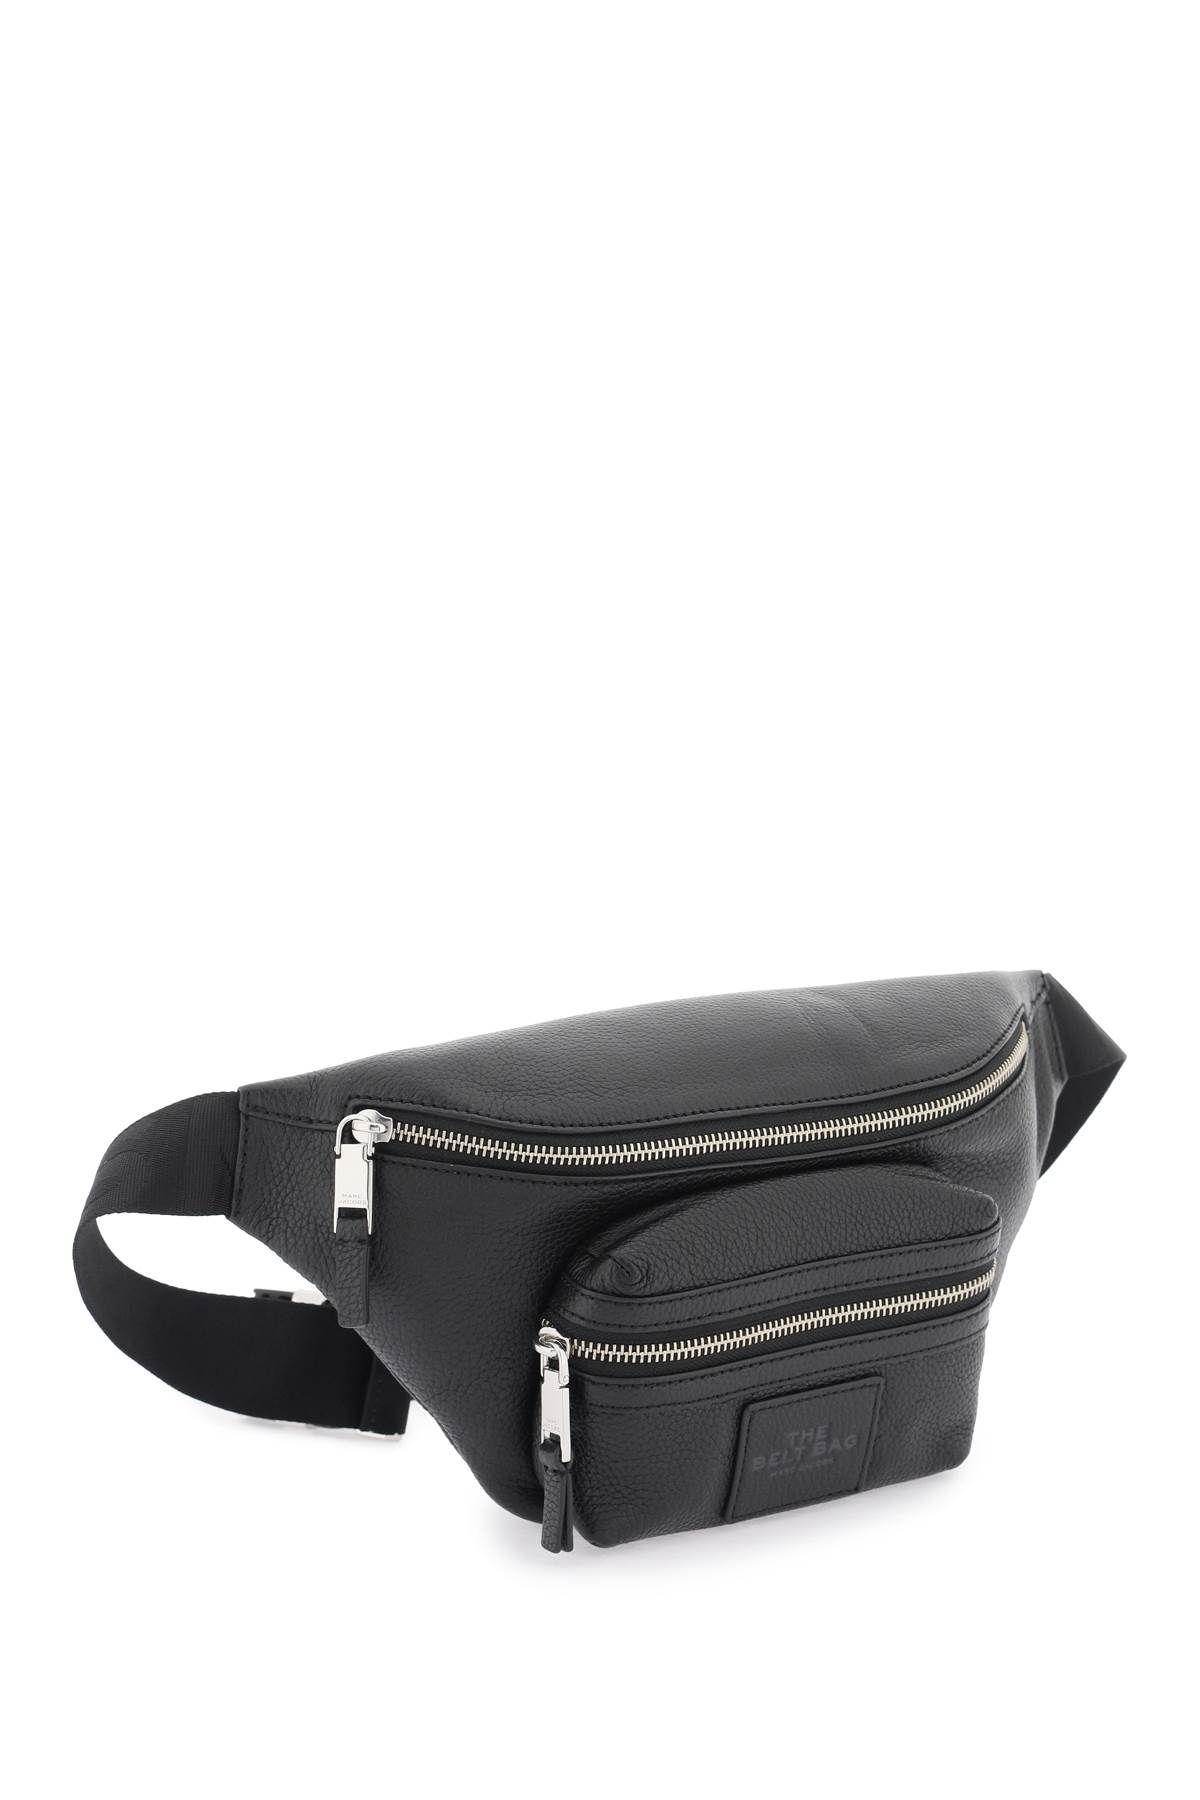 Shop Marc Jacobs Leather Belt Bag: The Sty In Black